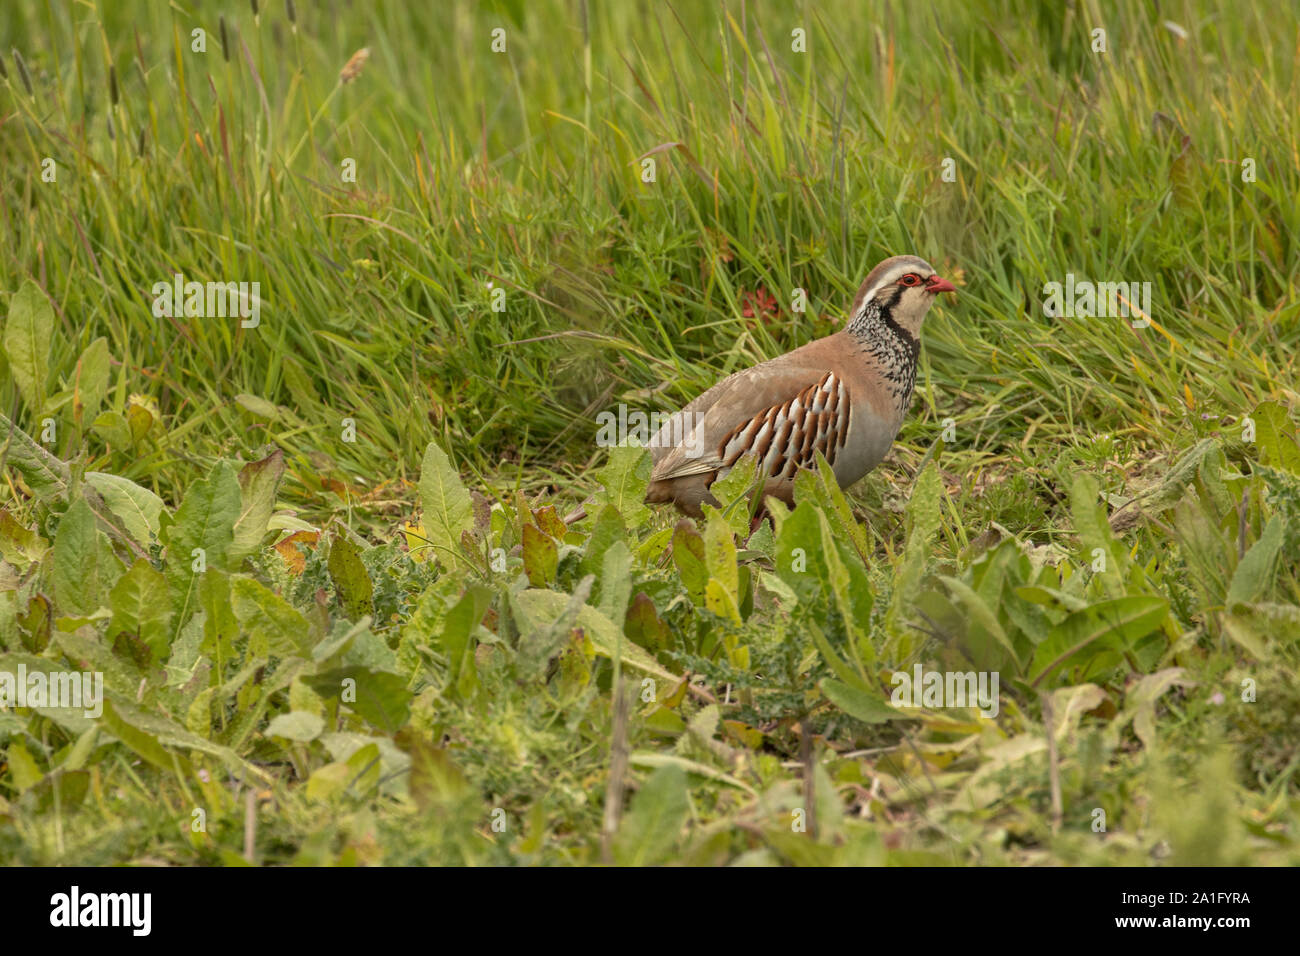 Red legged partridge in field, UK. Stock Photo